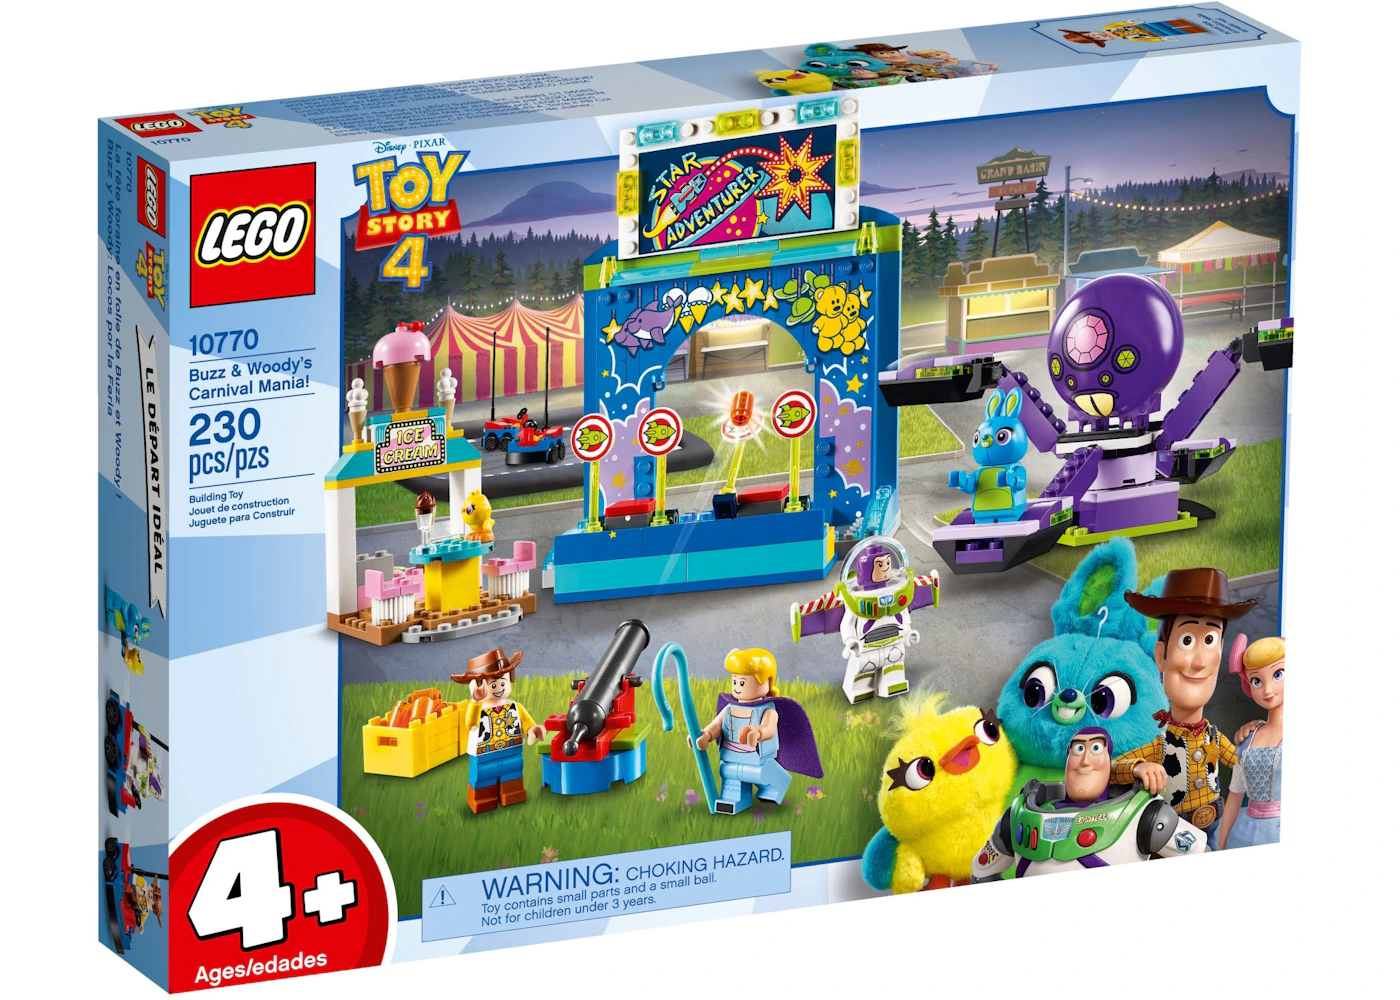 Pompeji overdrive blød LEGO Toy Story Buzz & Woody's Carnival Mania! Set 10770 - JP